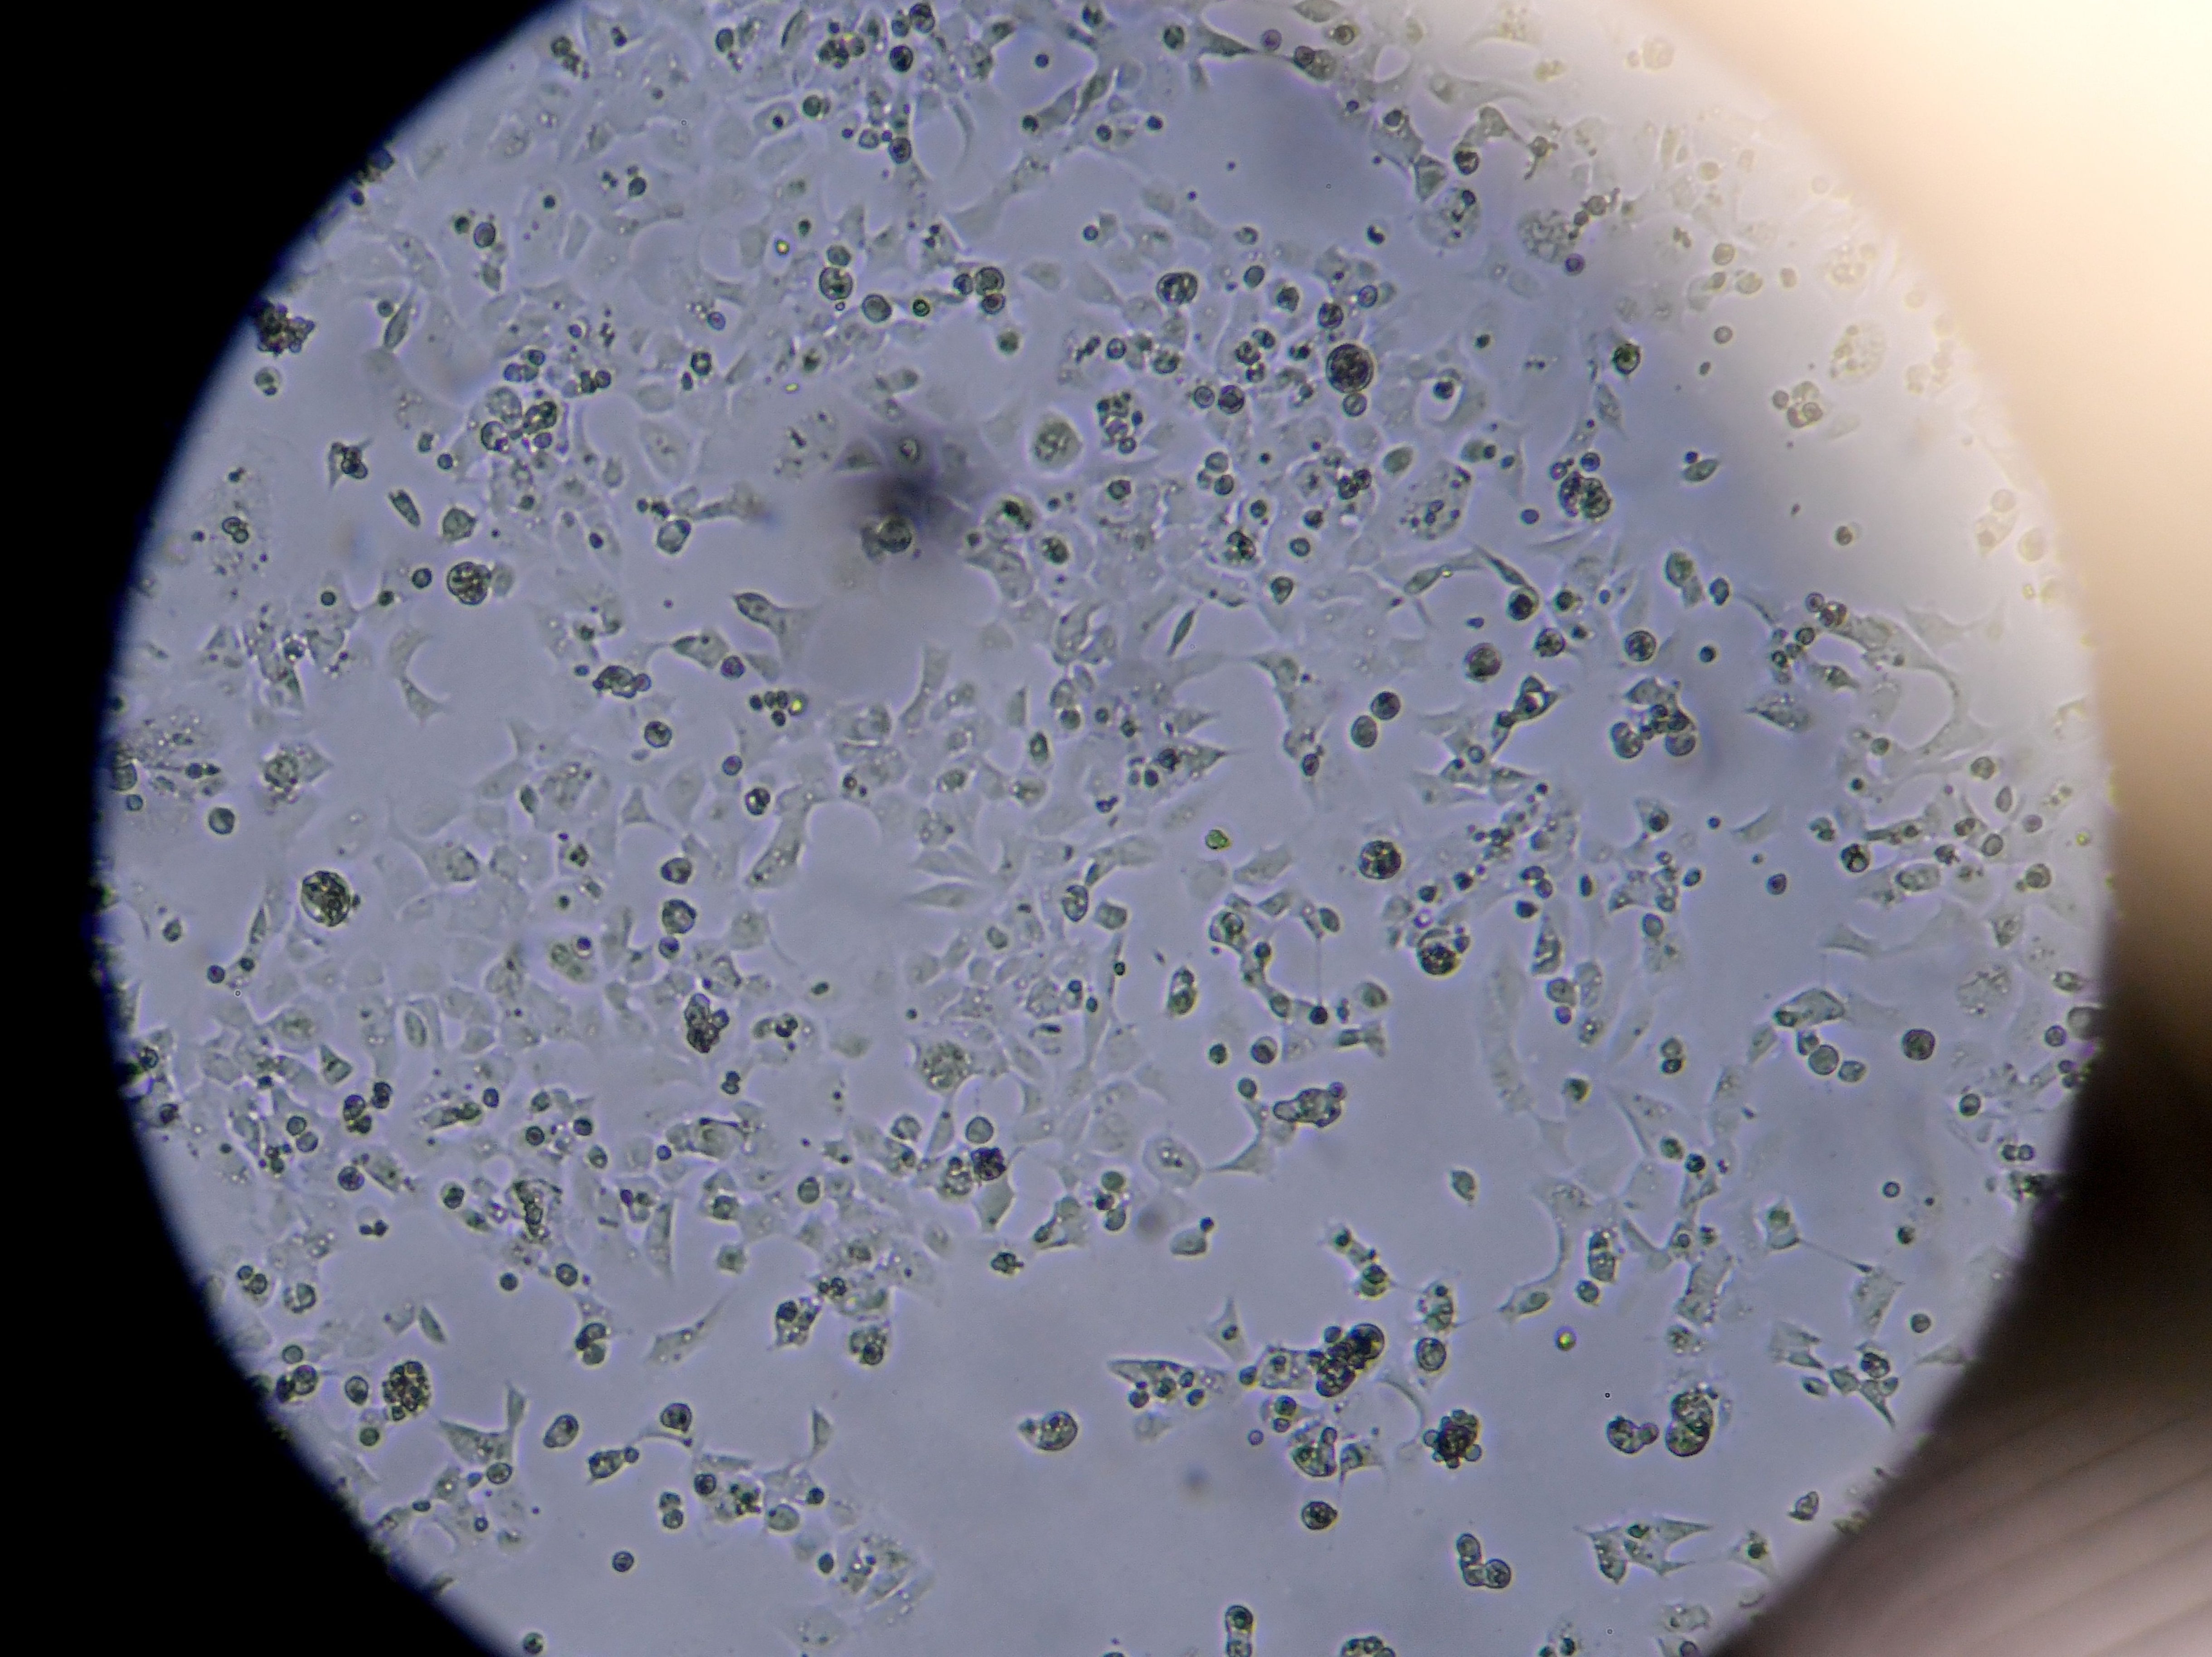 Cells containing the novel coronavirus Sars-CoV-2 seen through a microscope